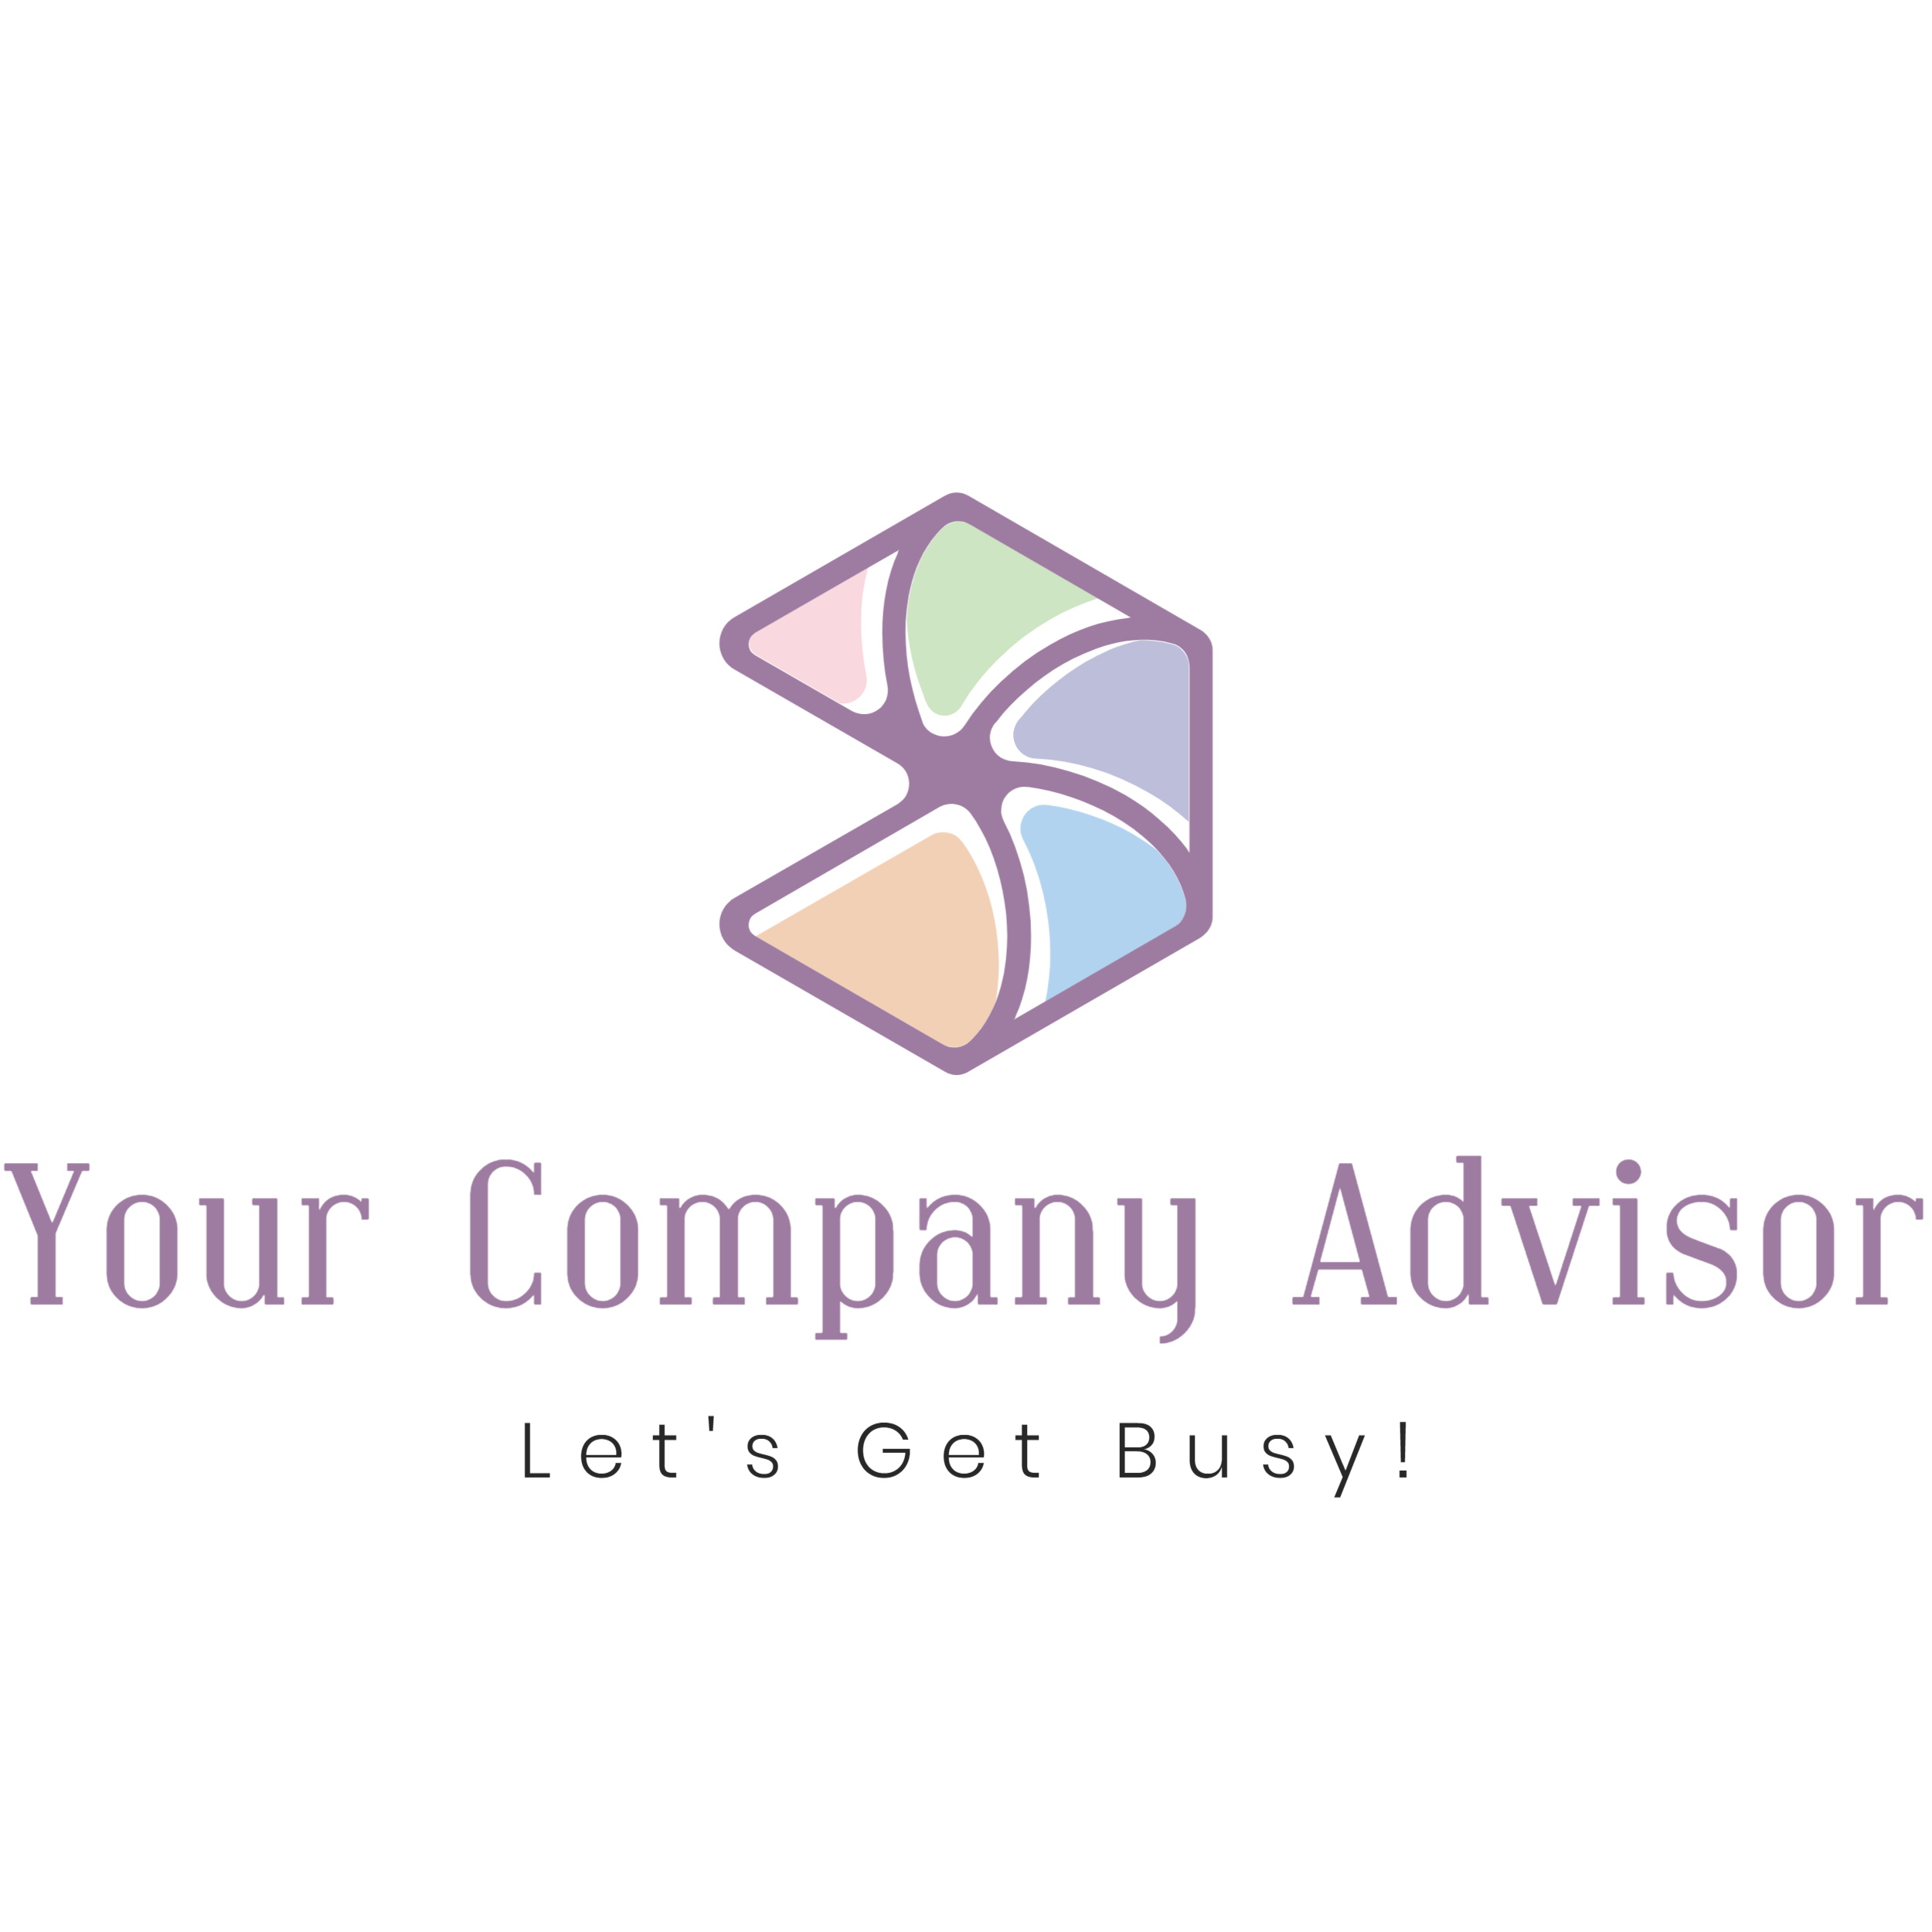 Your Company Advisor